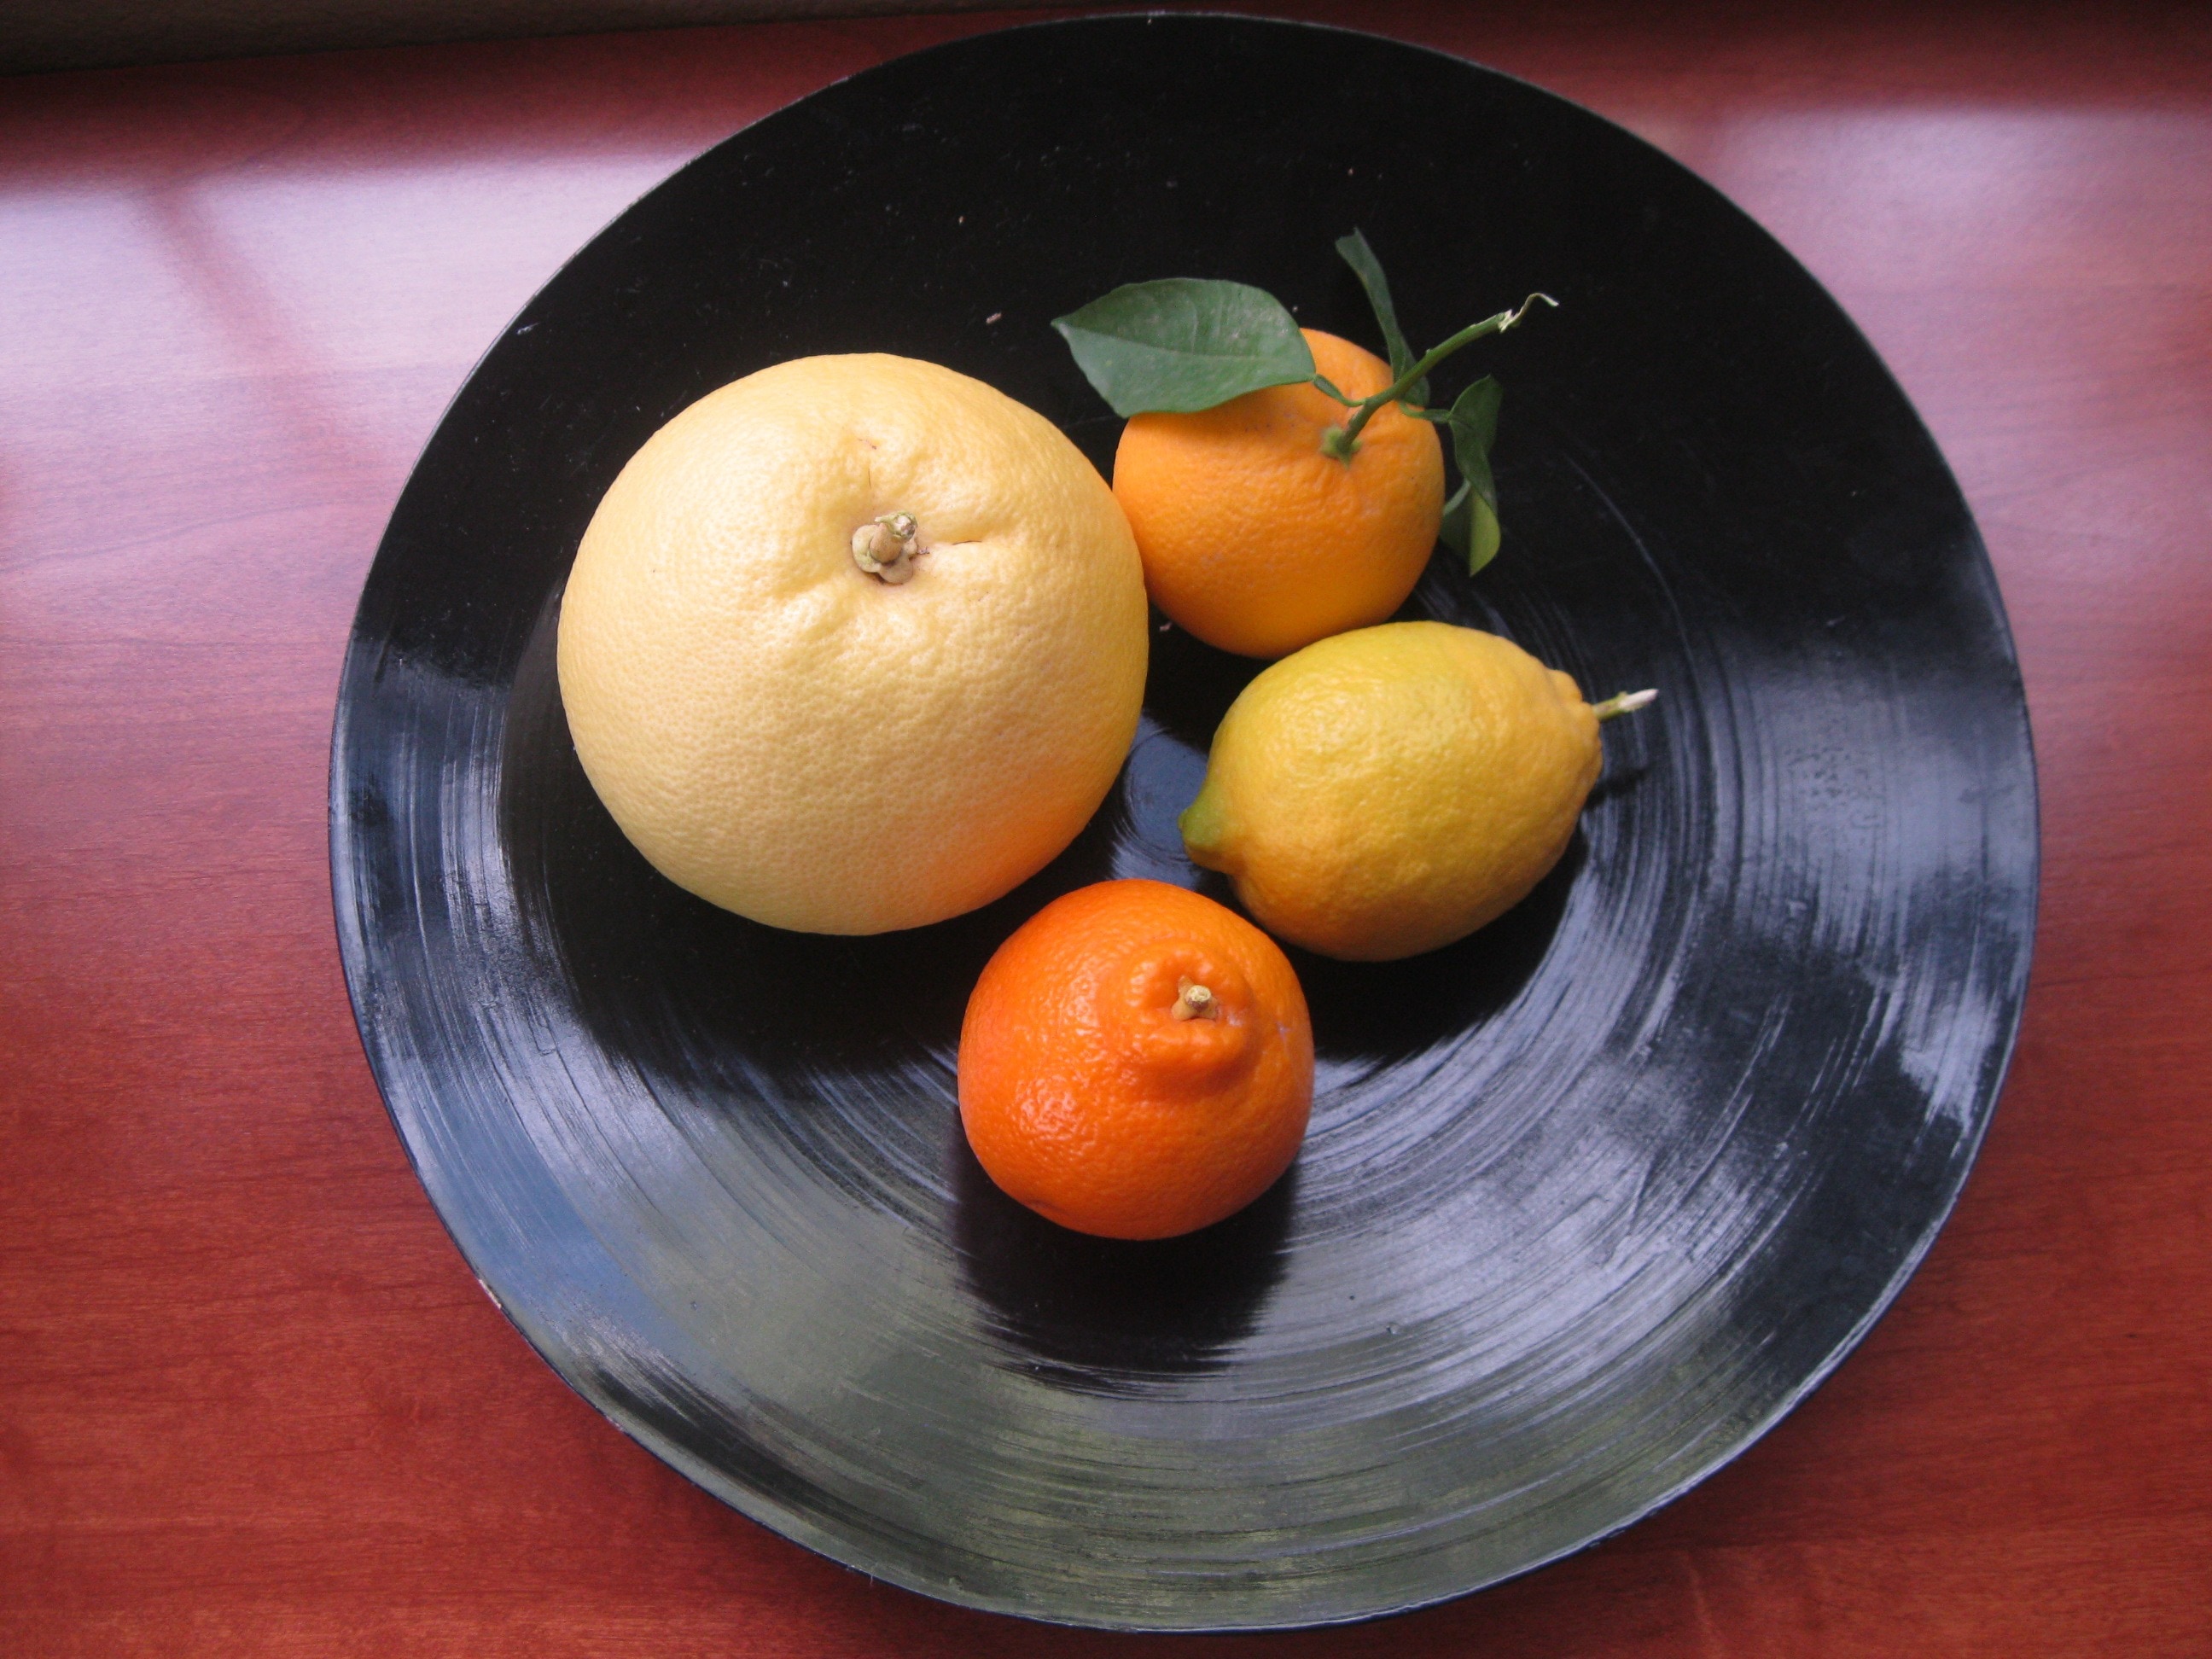 tangerine, orange, lemon and citrus fruits